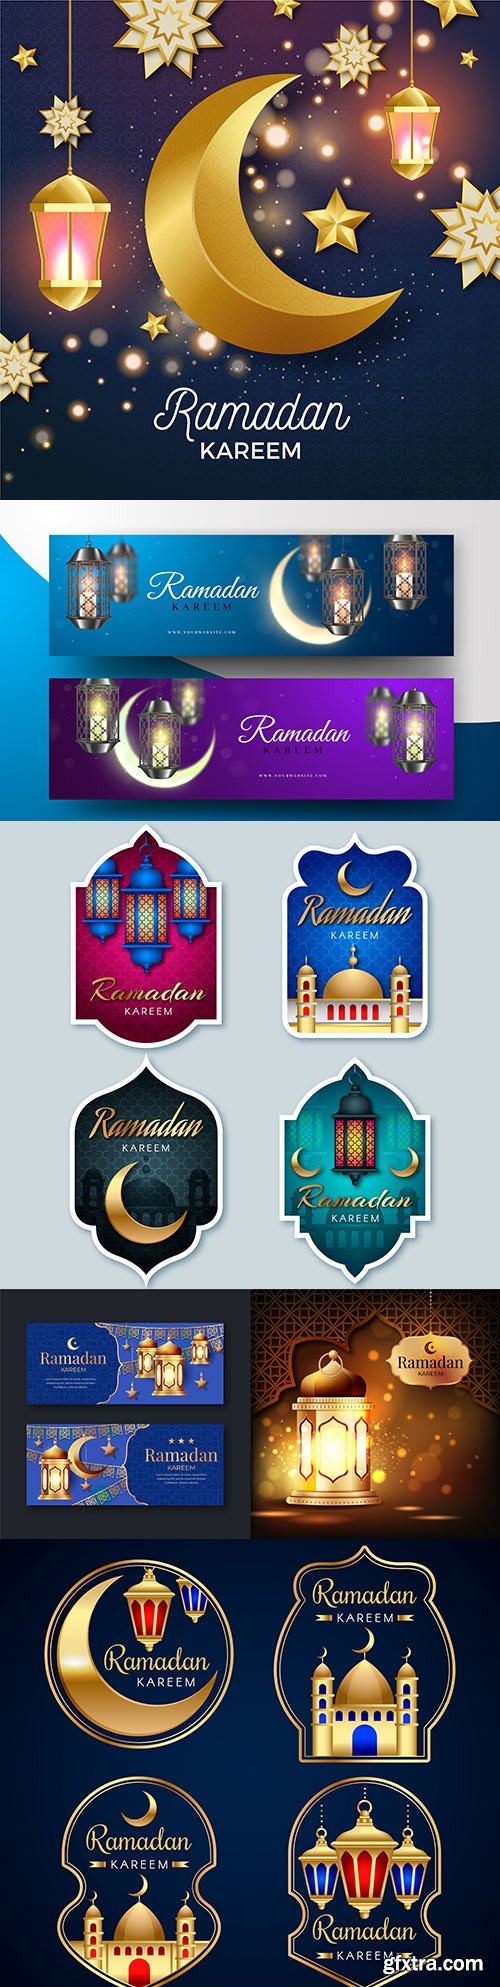 Ramadan Kareem Islamic postcard design illustrations 21